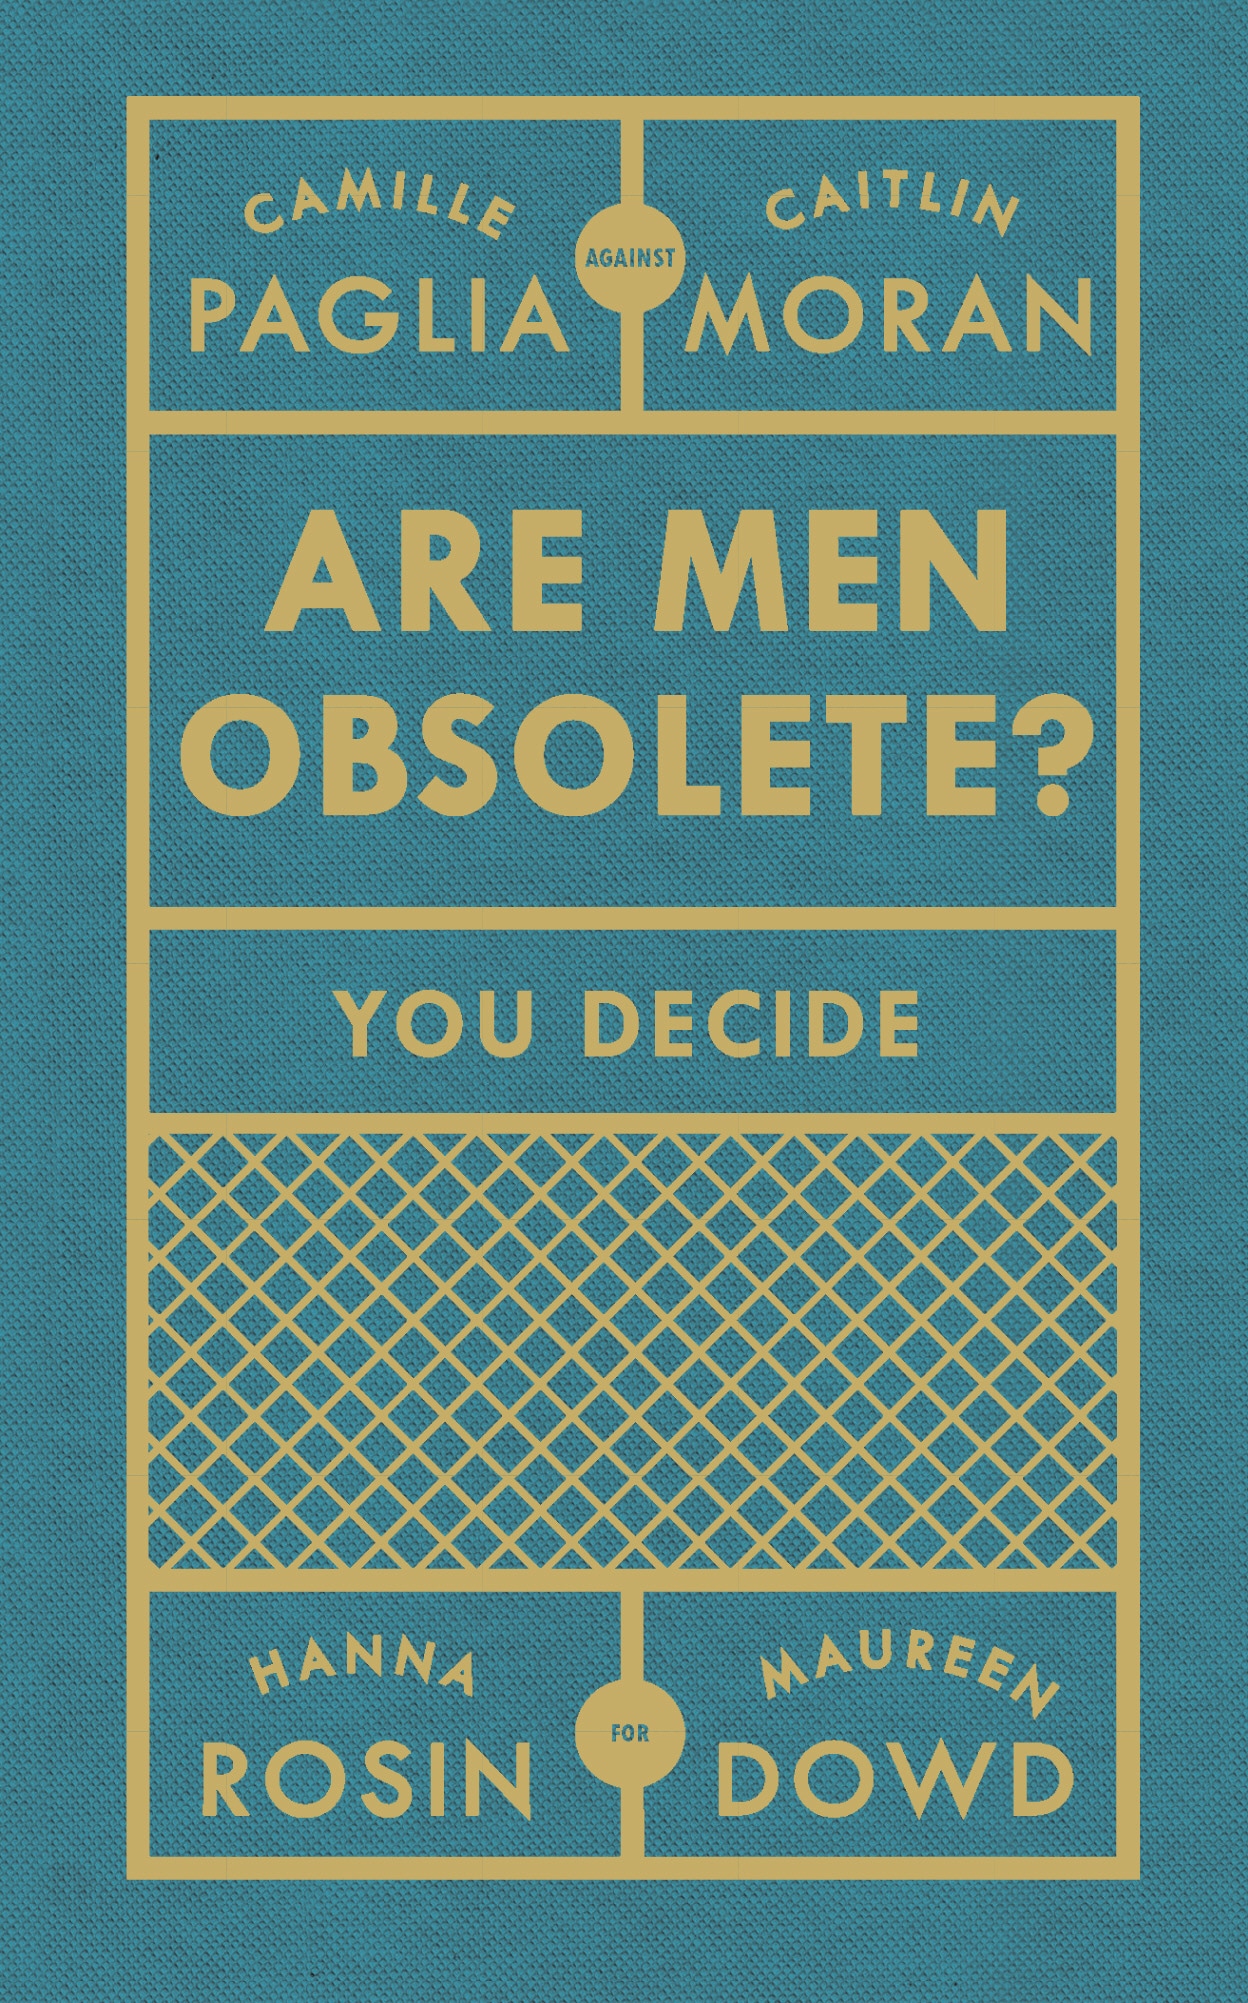 Book “Are Men Obsolete?” by Caitlin Moran — September 12, 2019